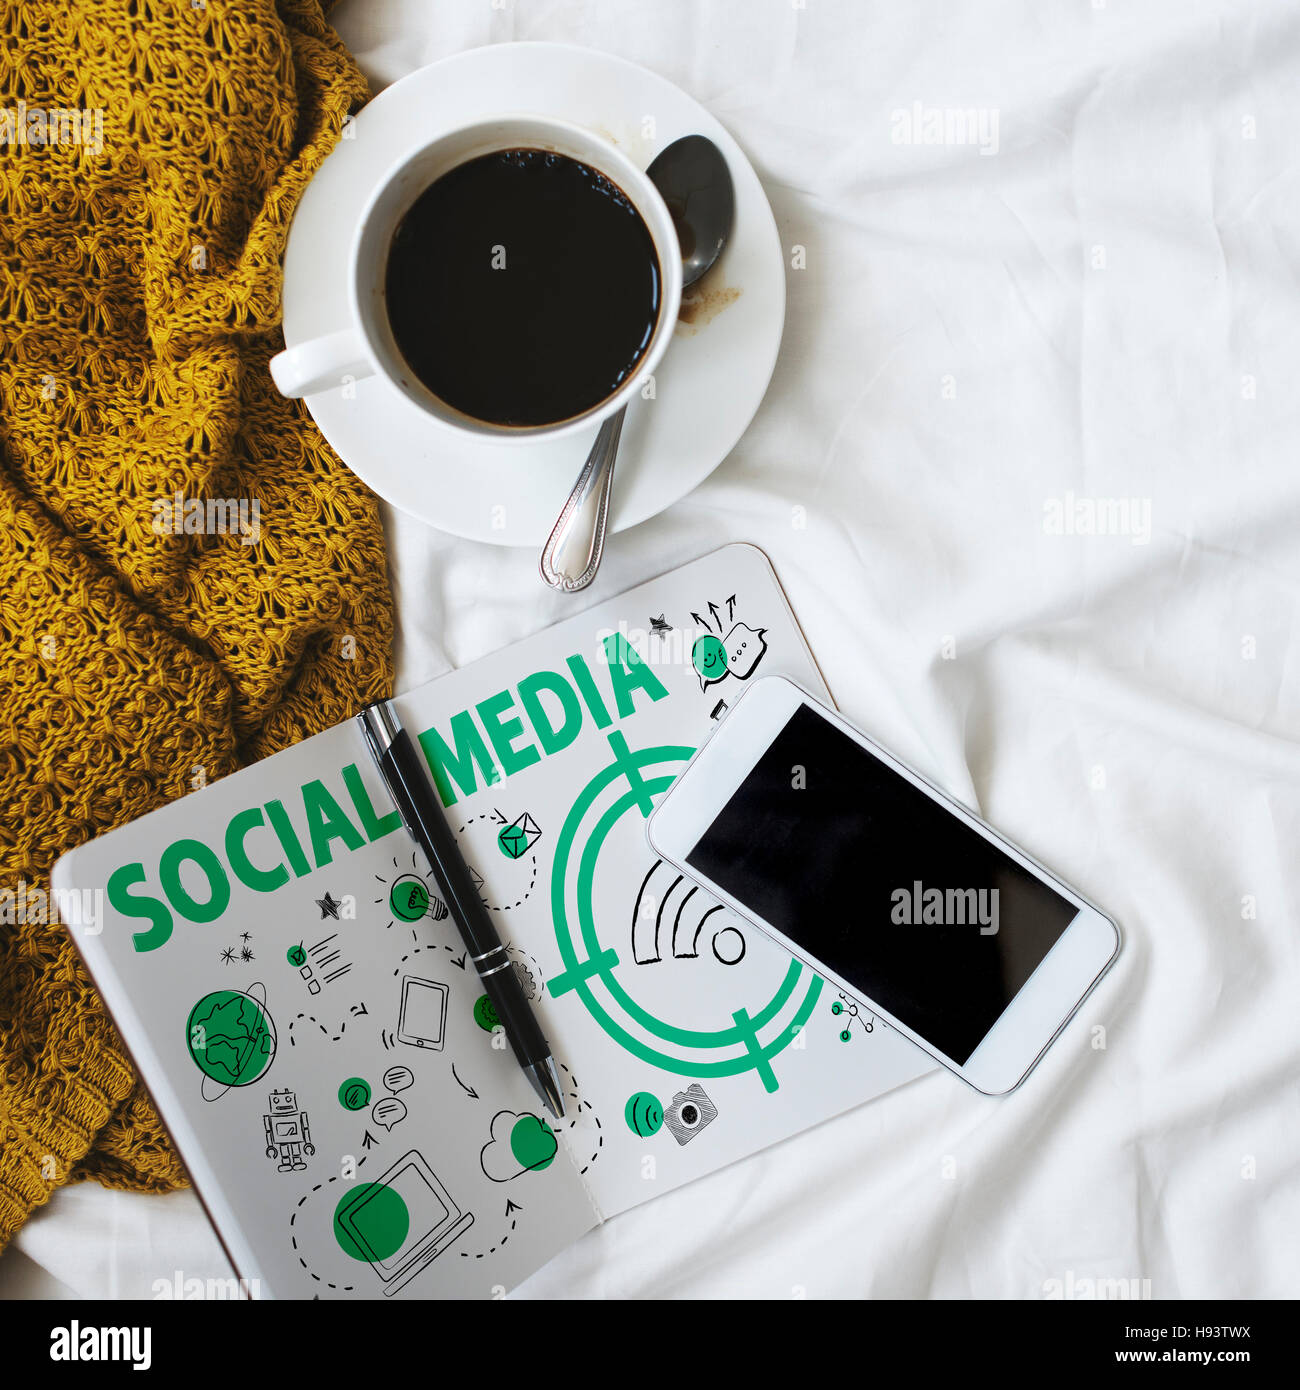 Social Media Word Wifi Signal Concept Stock Photo